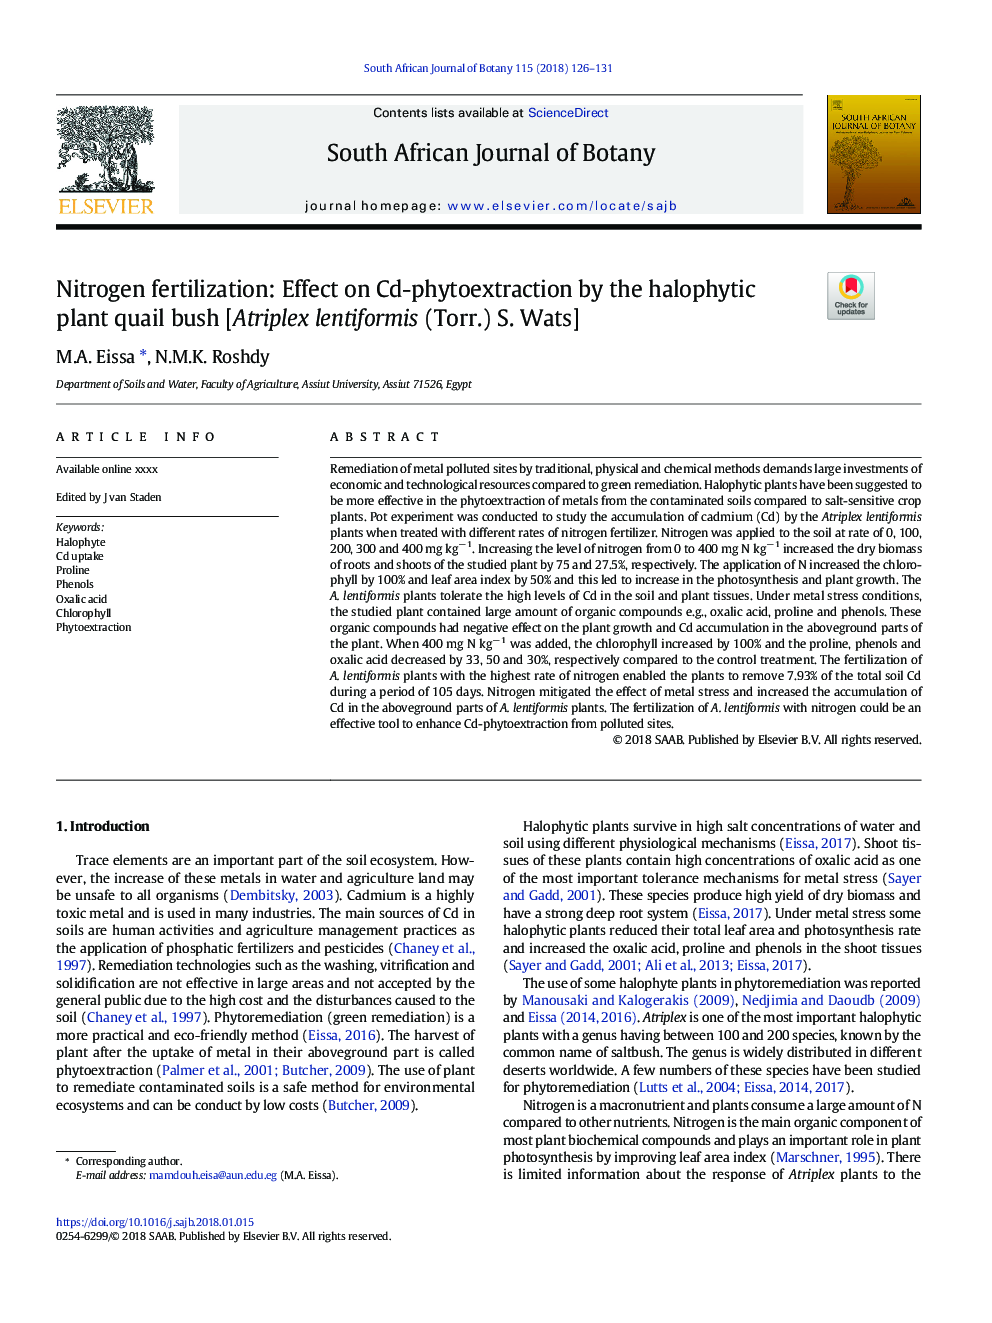 Nitrogen fertilization: Effect on Cd-phytoextraction by the halophytic plant quail bush [Atriplex lentiformis (Torr.) S. Wats]